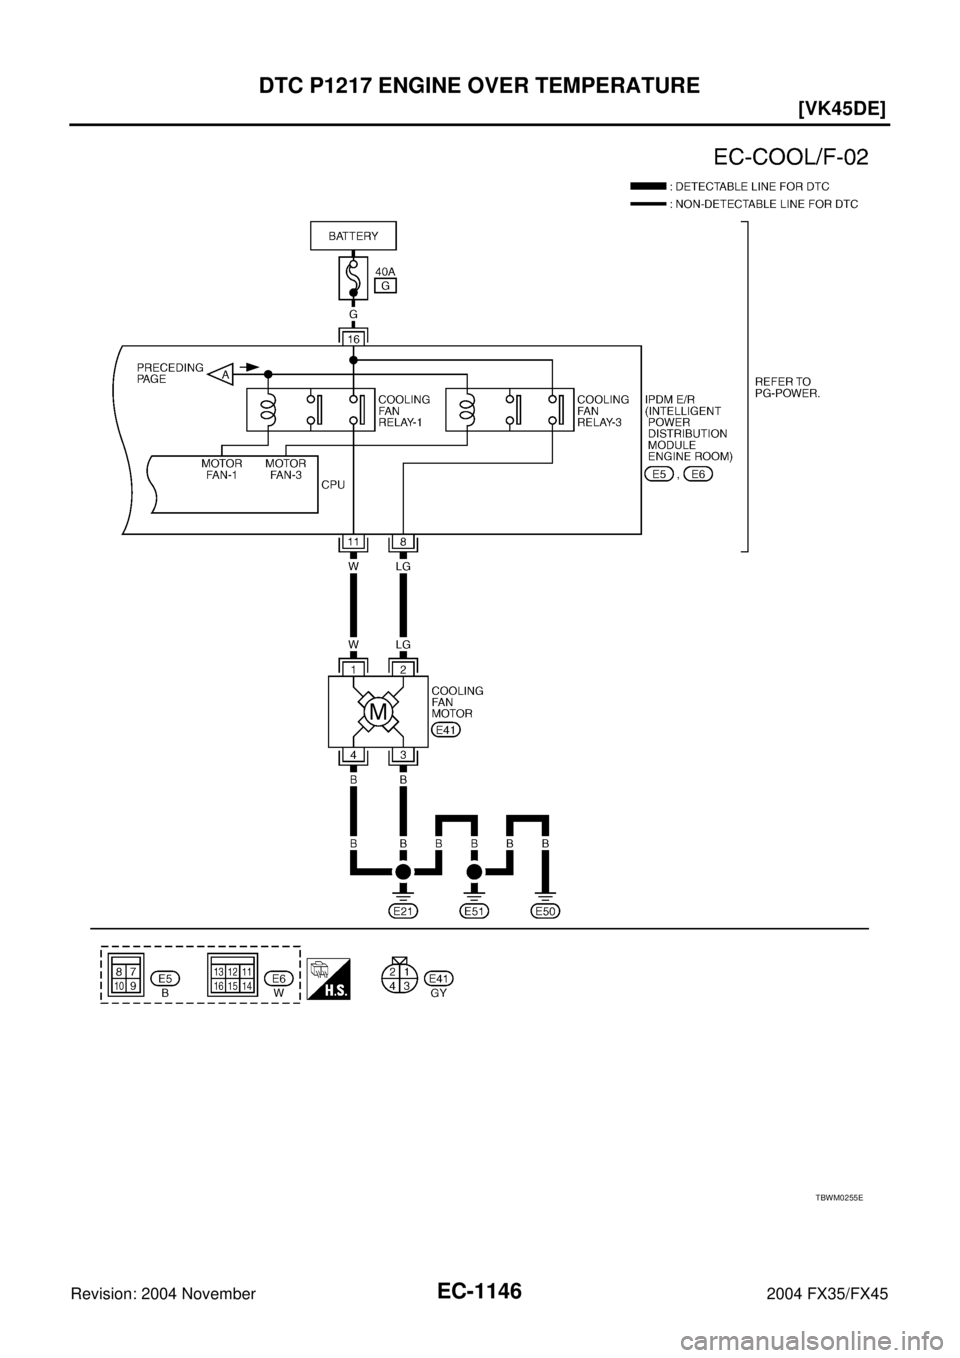 INFINITI FX35 2004  Service Manual EC-1146
[VK45DE]
DTC P1217 ENGINE OVER TEMPERATURE
Revision: 2004 November 2004 FX35/FX45
TBWM0255E 